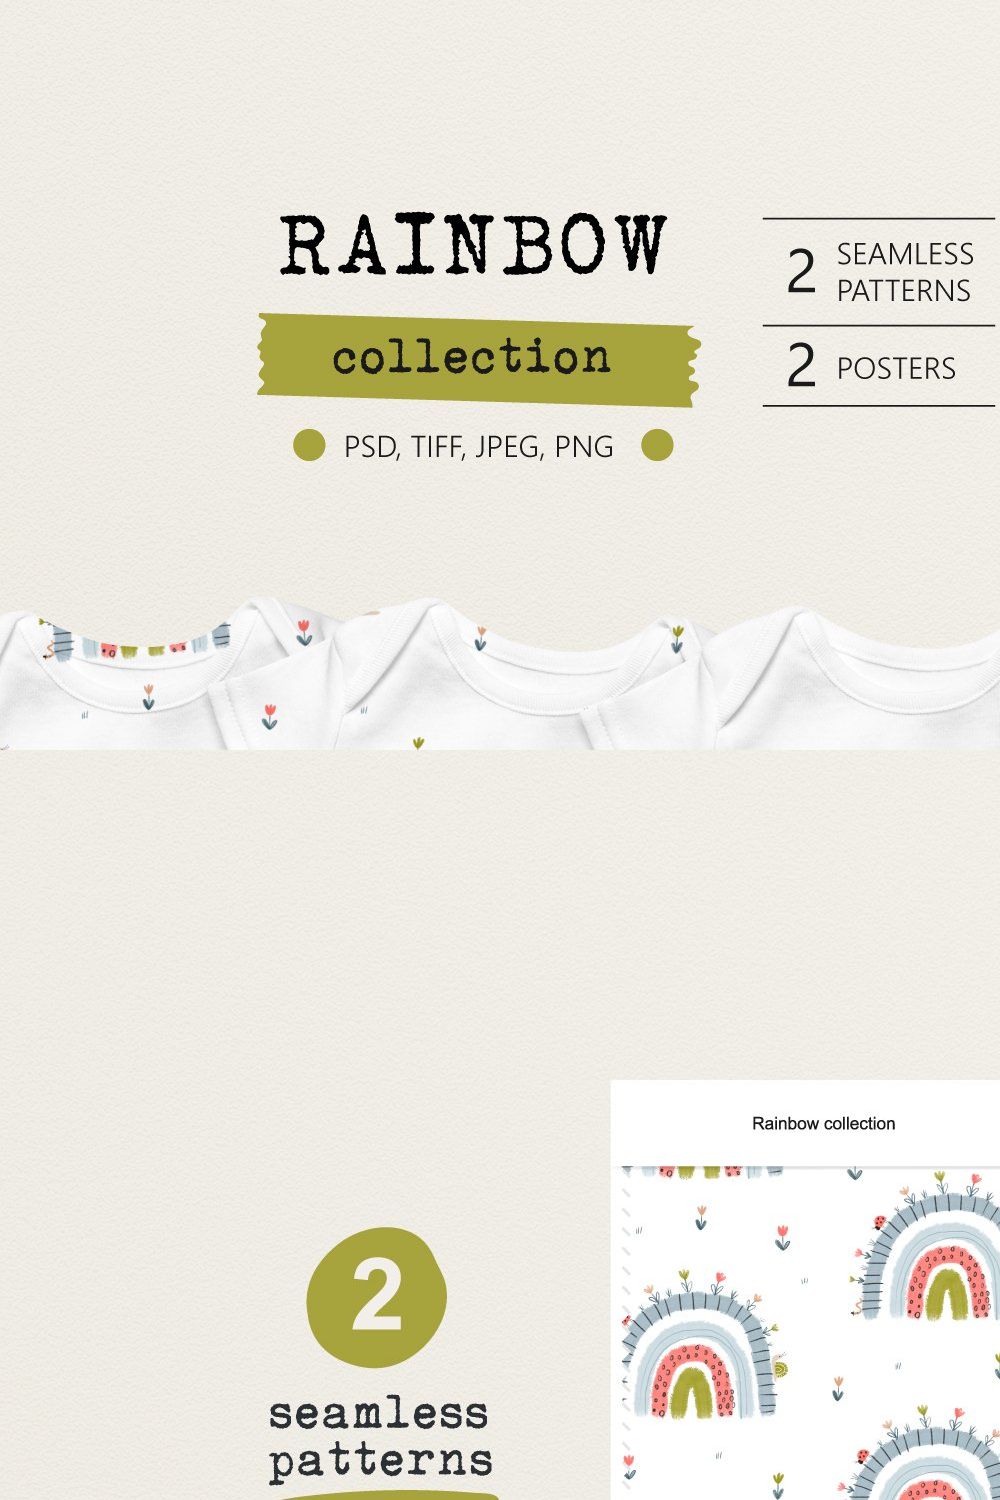 Rainbow pinterest preview image.